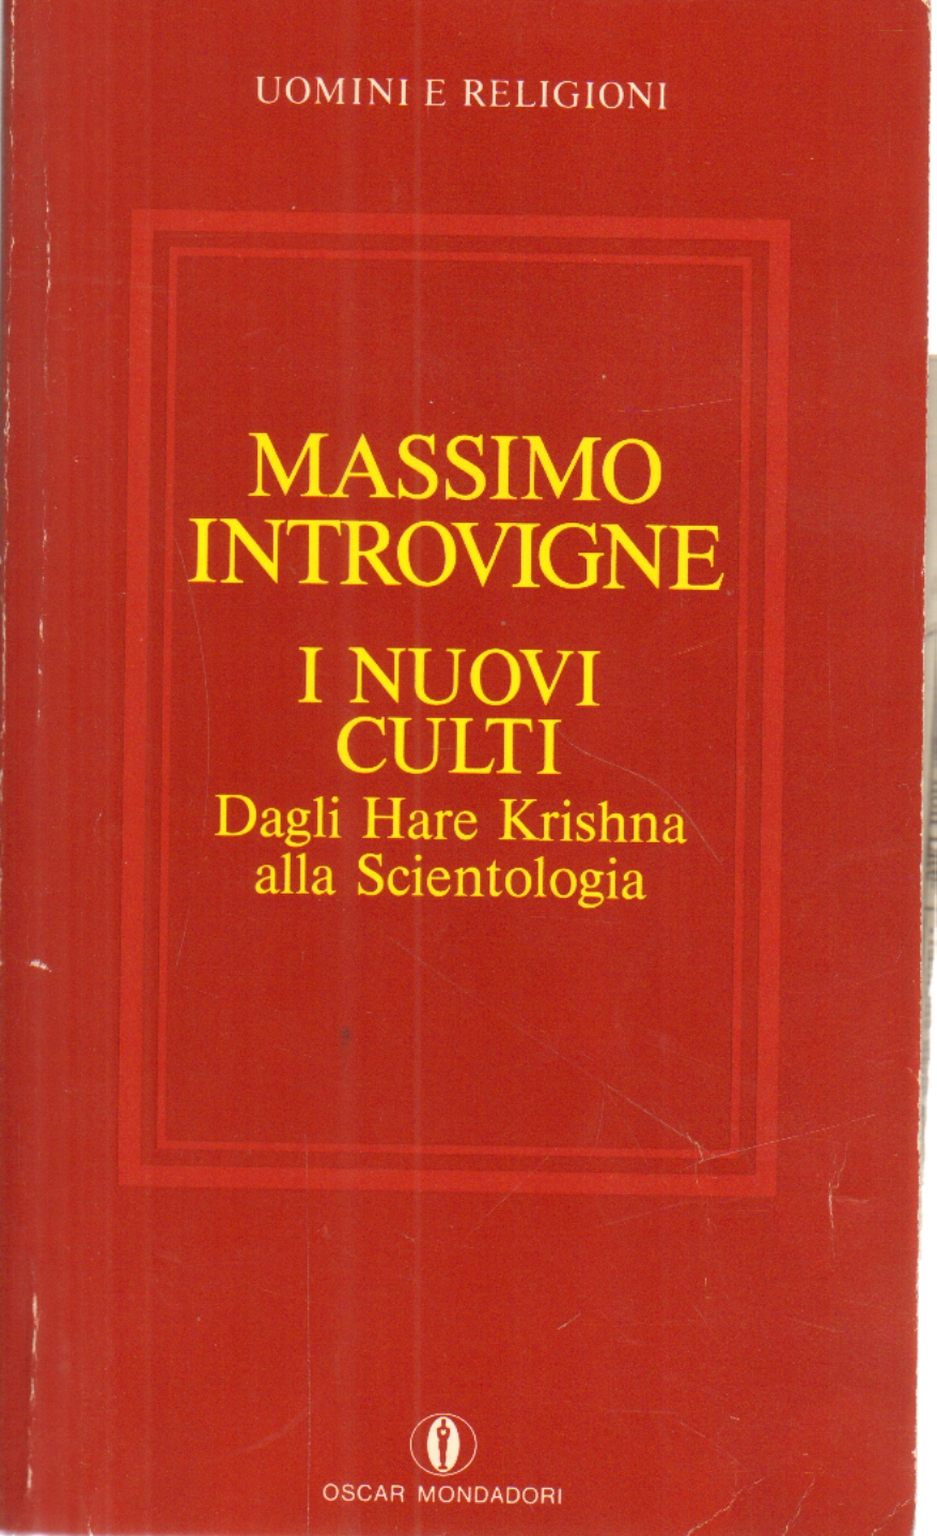 I nuovi culti, Massimo Introvigne